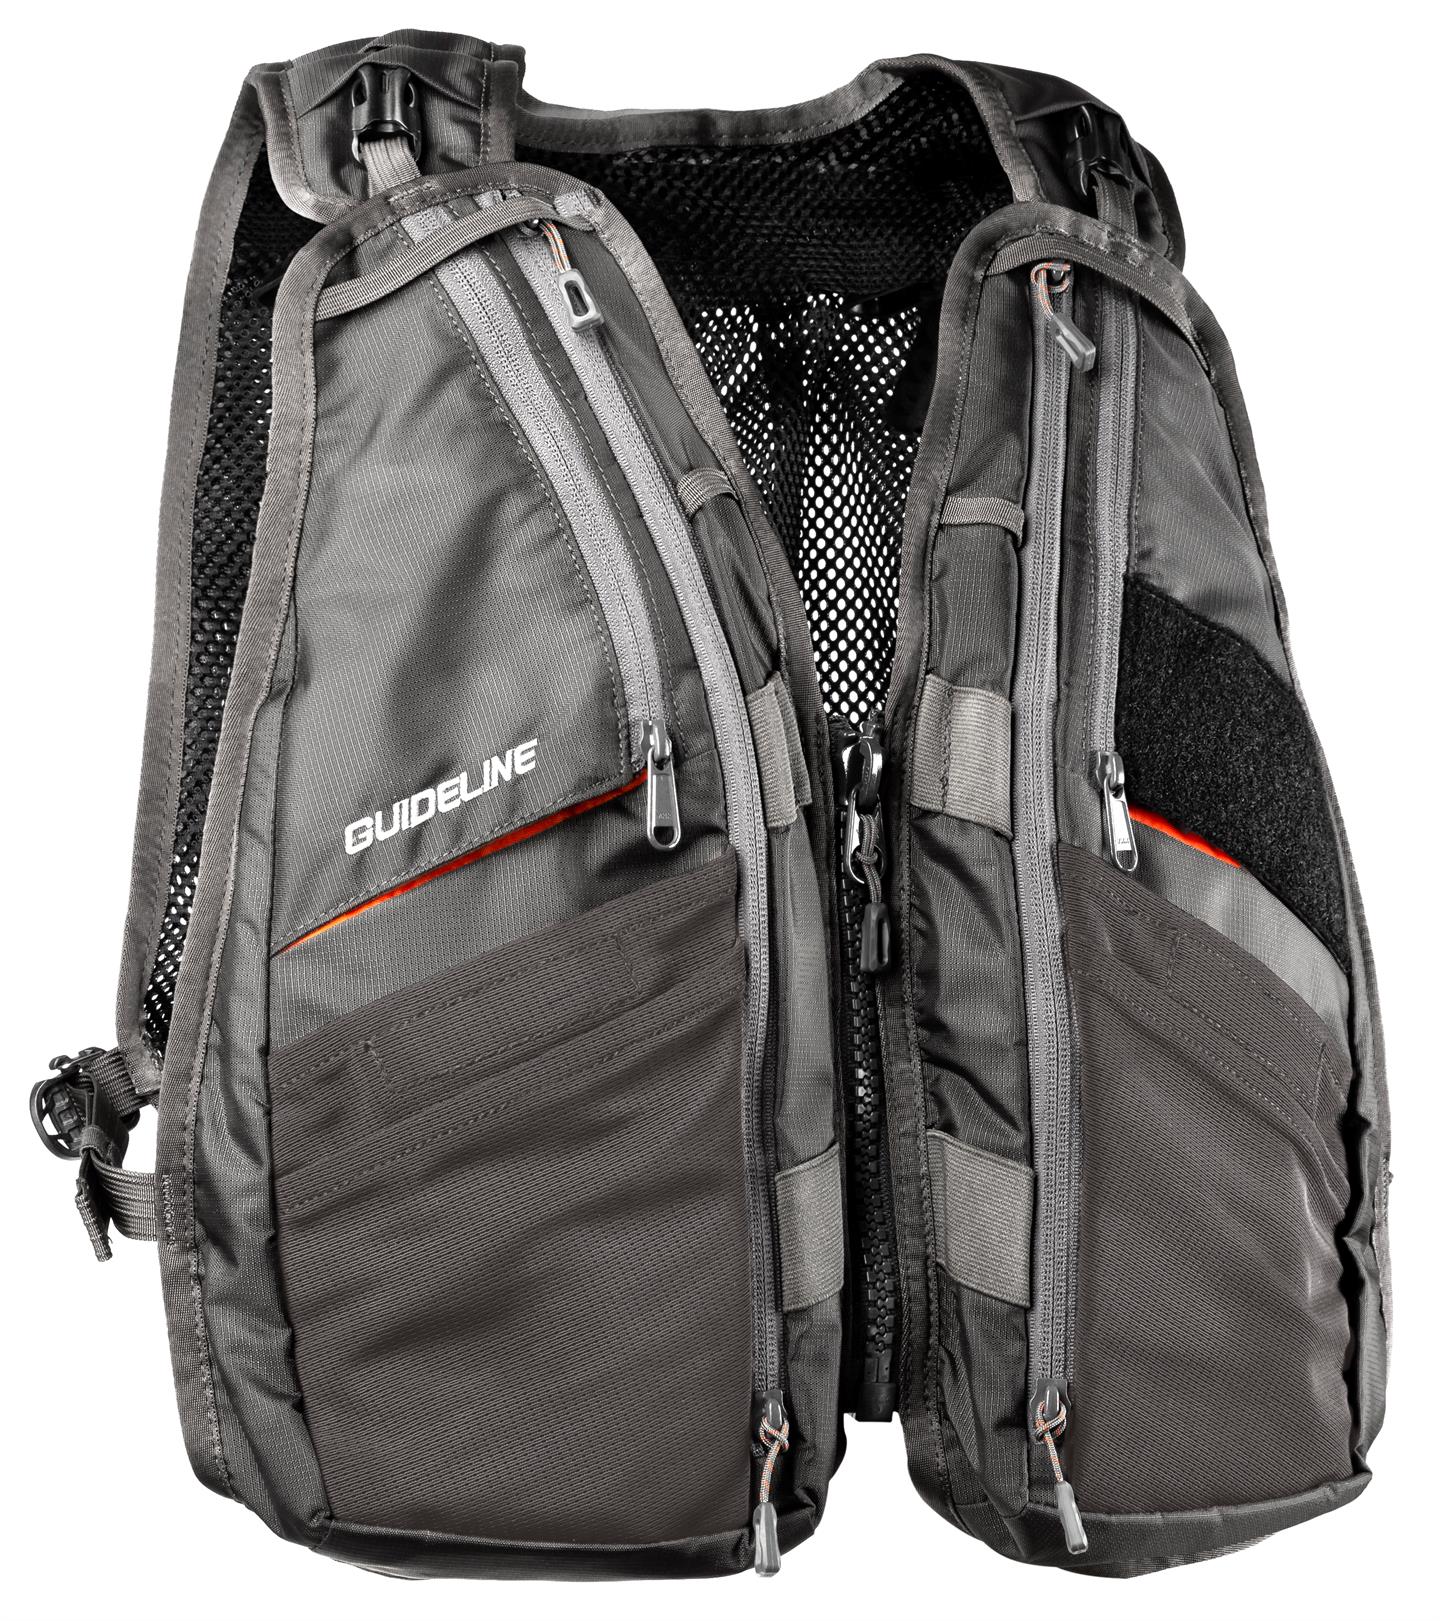 Guideline Reel bag, Fly Reel Cases, Bags and Backpacks, Equipment